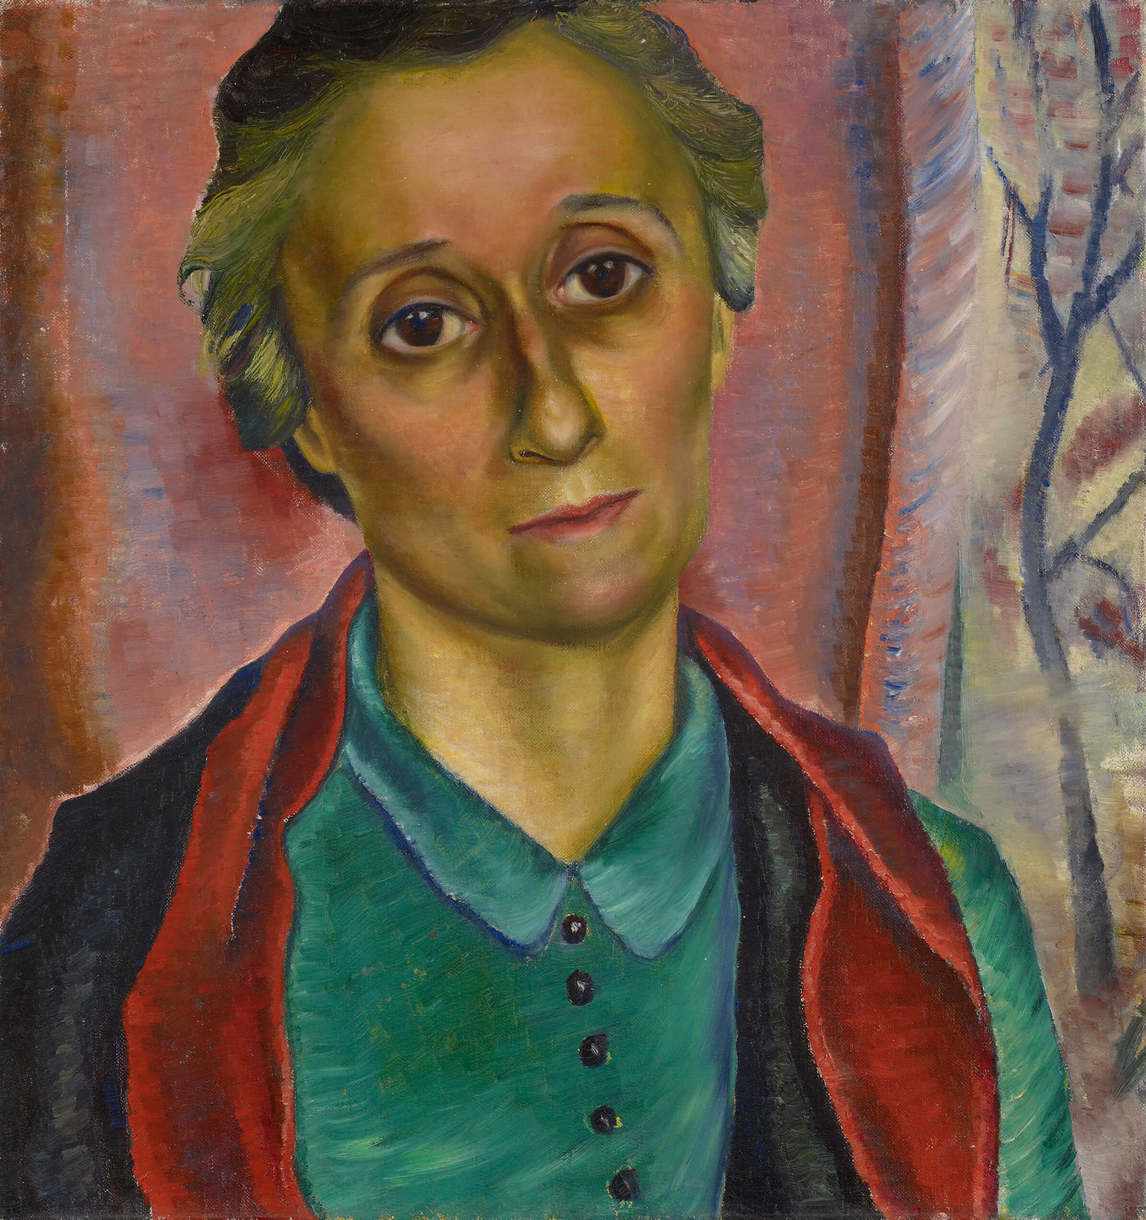 Art Canada Institute, Prudence Heward, Portrait Study of the Heward's sister Rooney, 1938